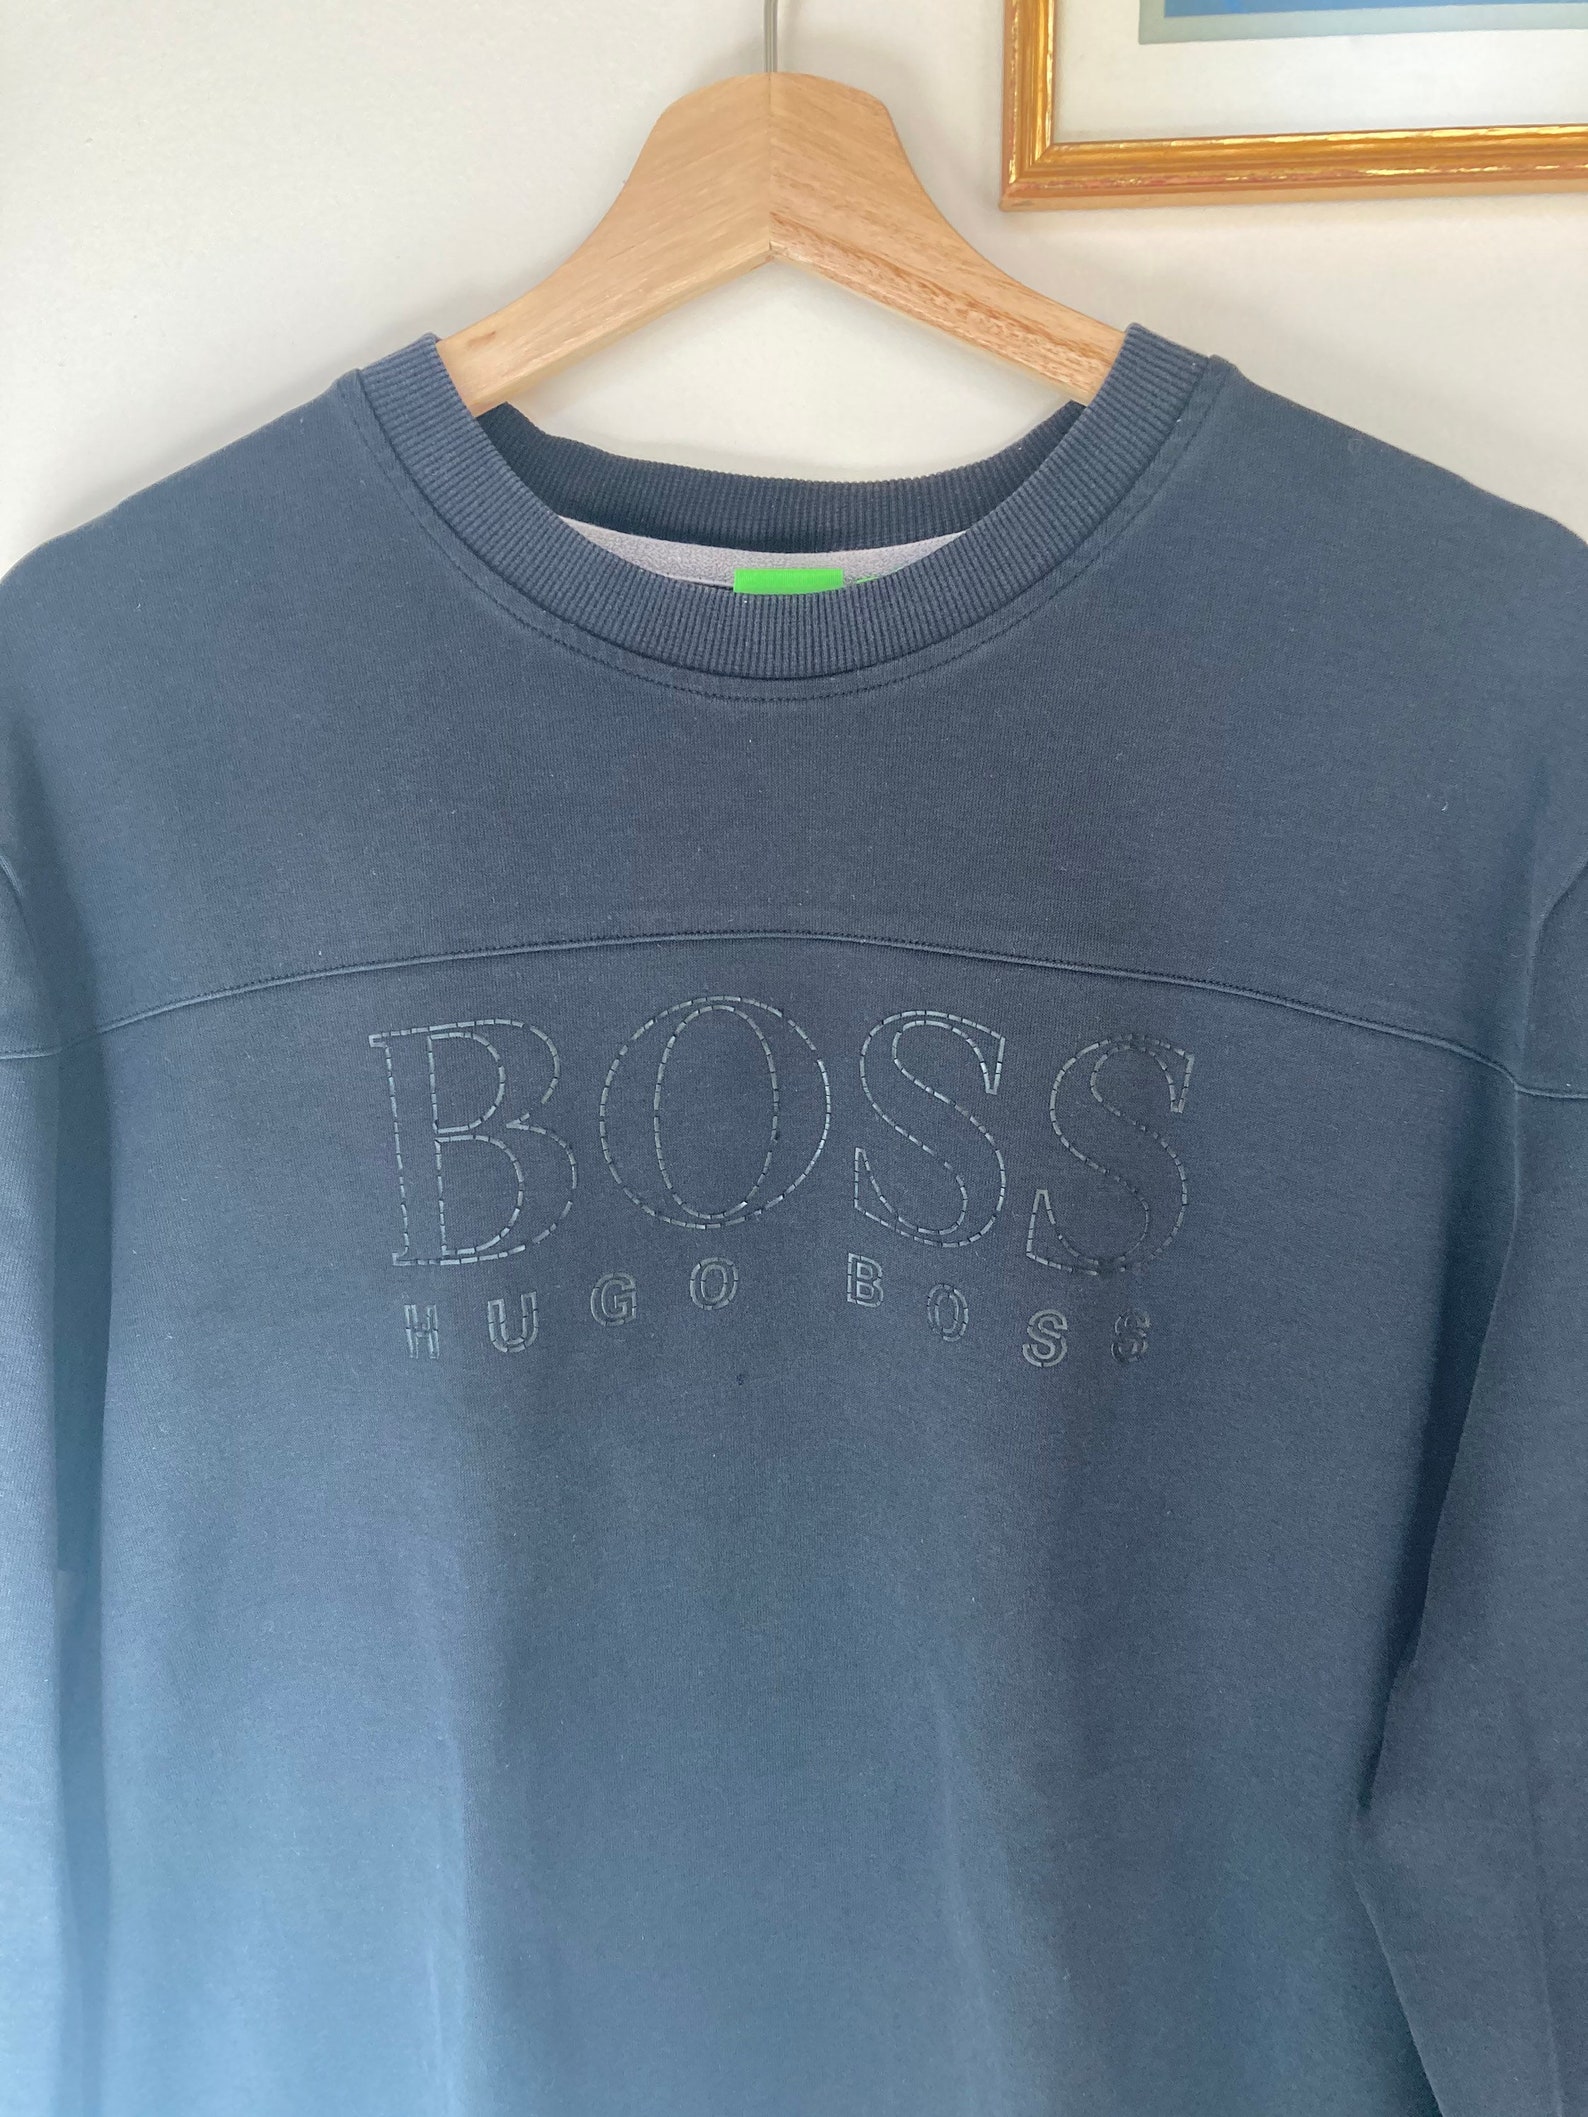 Vintage Black Hugo Boss Sweater | Etsy